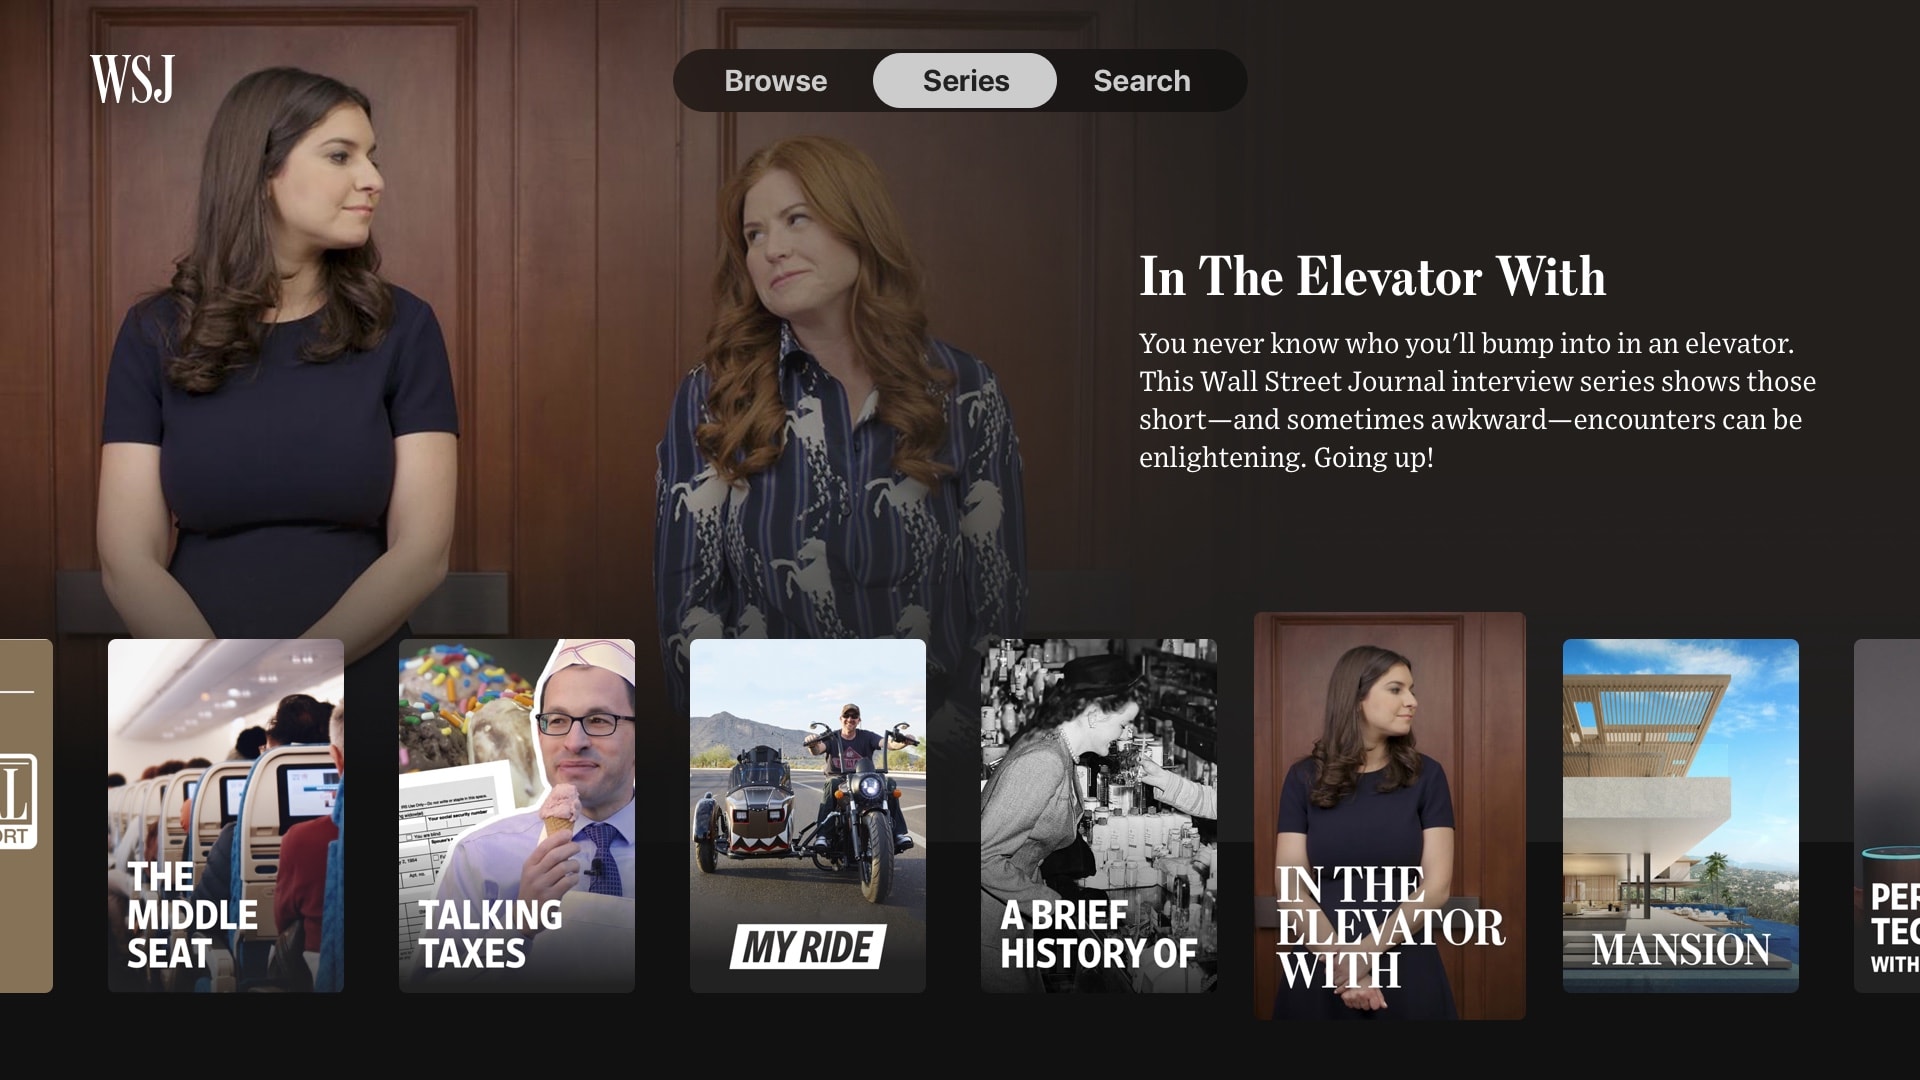 The Wall Street Journal Apple TV series screen showing video series titles, poster art, and a short description.